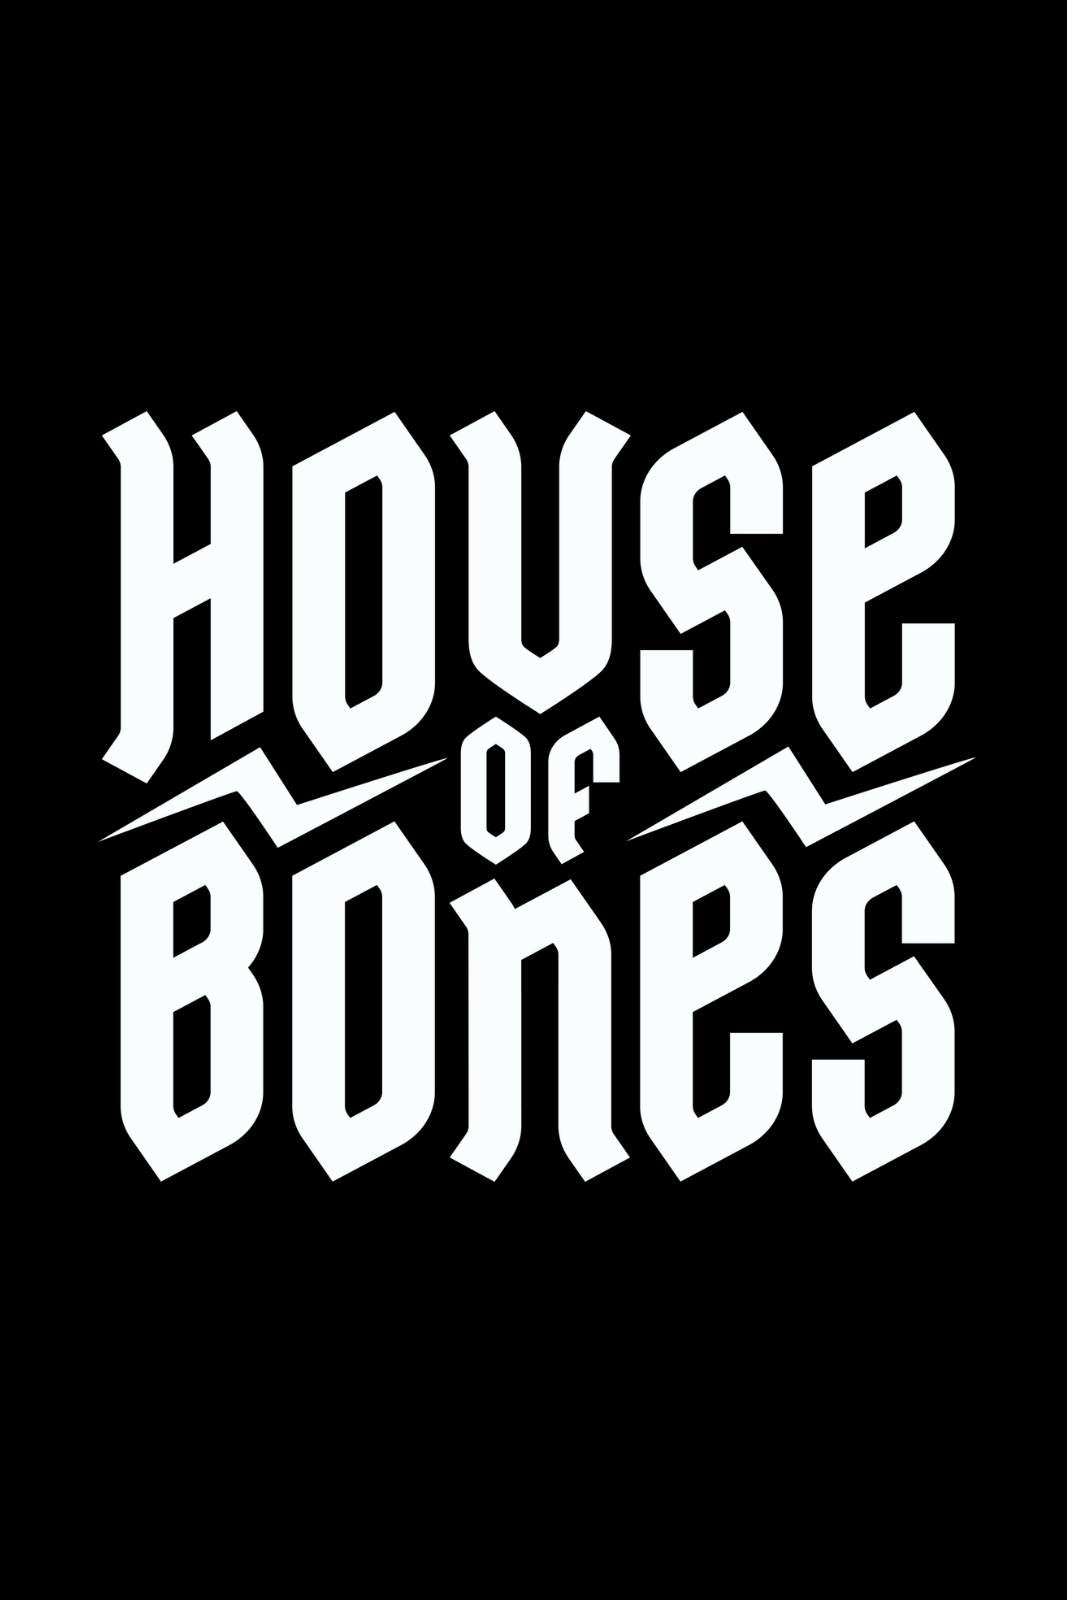 House of Bones logo shirt